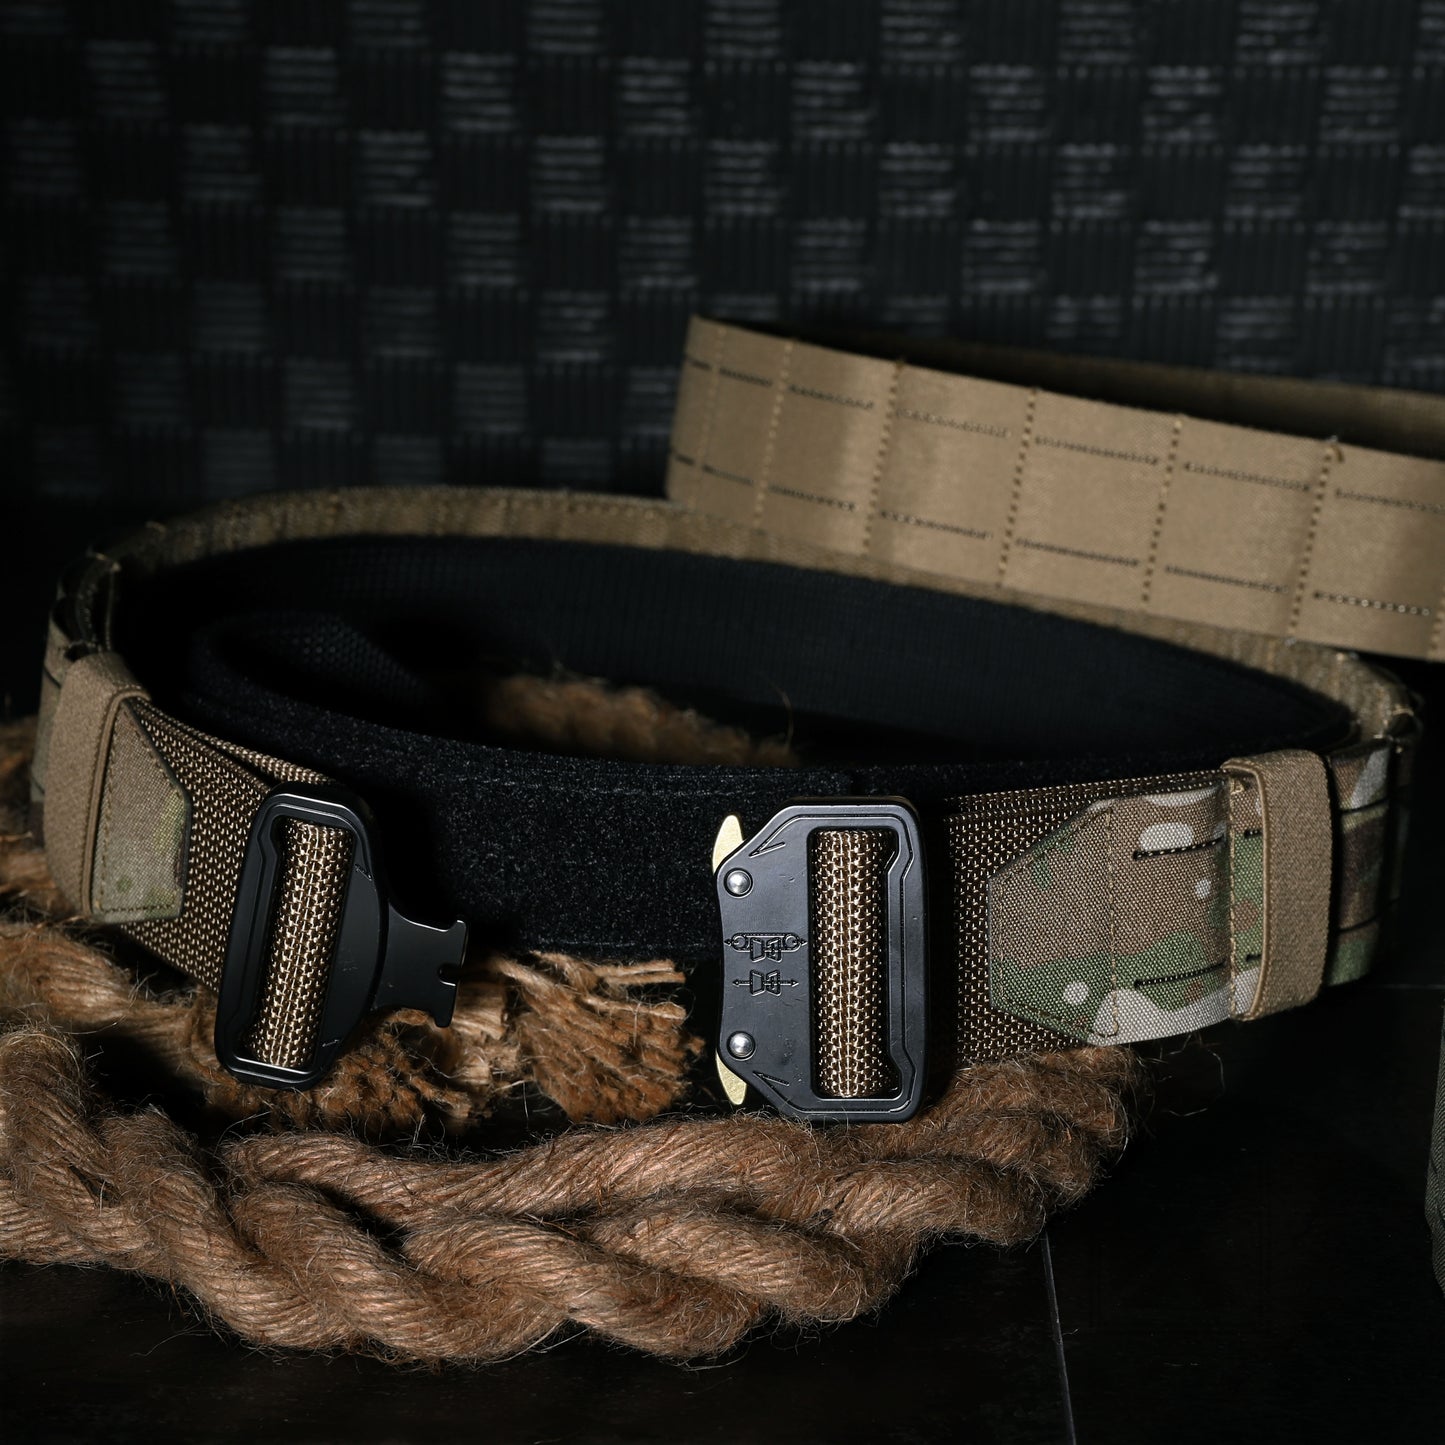 Krydex Tactical Molle Belt Quick Release Duty Gun Shooting Belt Laser Molle Padded Load Bearing Stiffened Belt